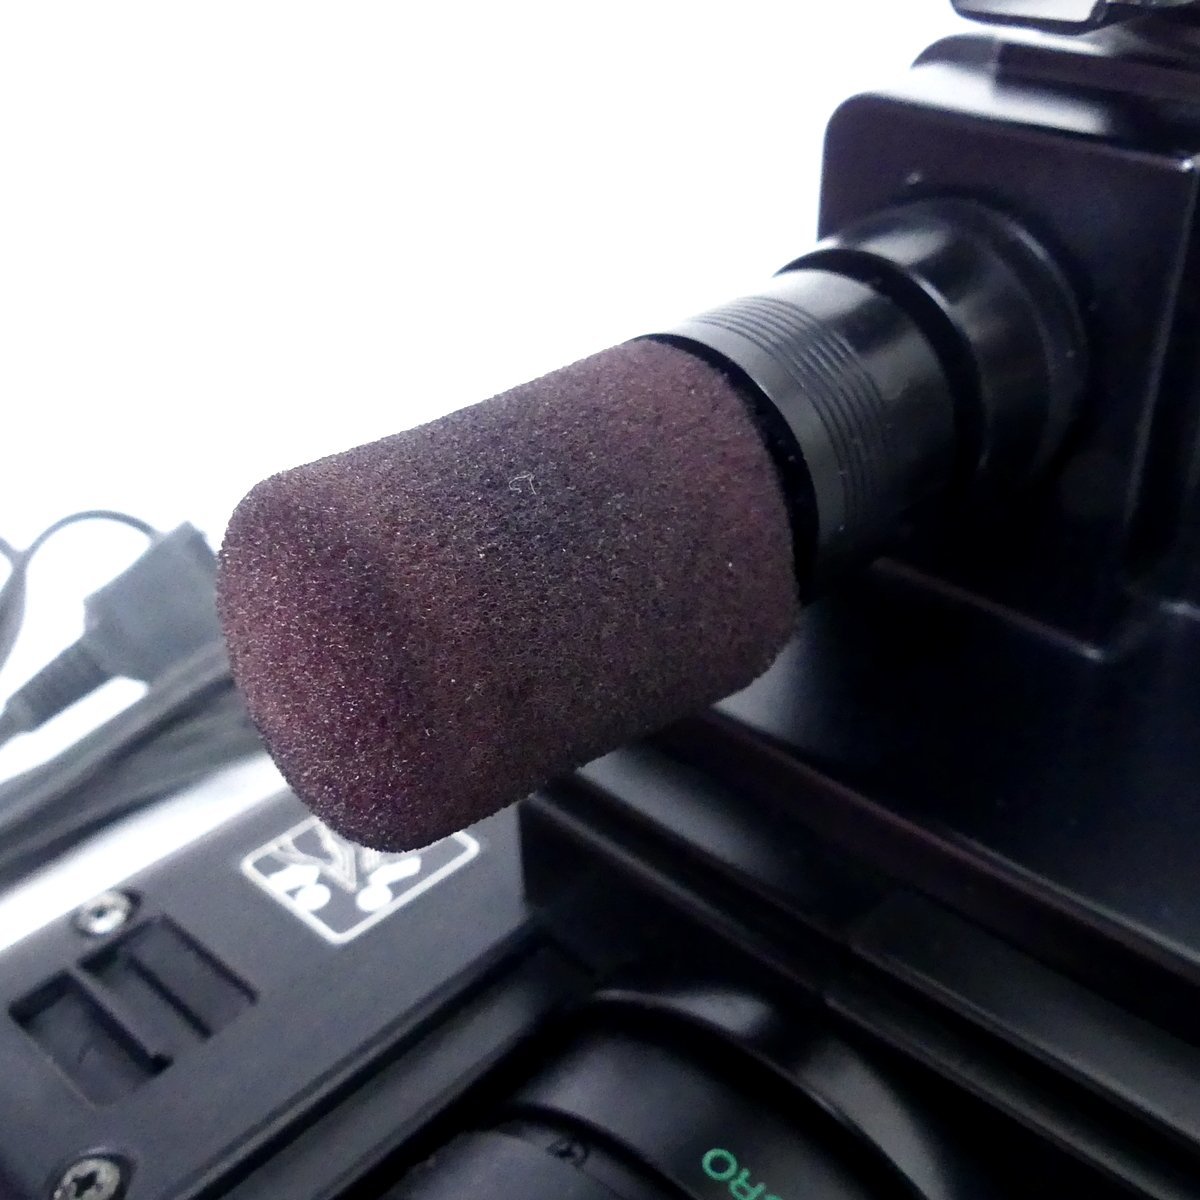 SONY Sony CCD-V8 видео камера магнитофон 8 мм видео камера retro электризация только проверка текущее состояние USED /2309C